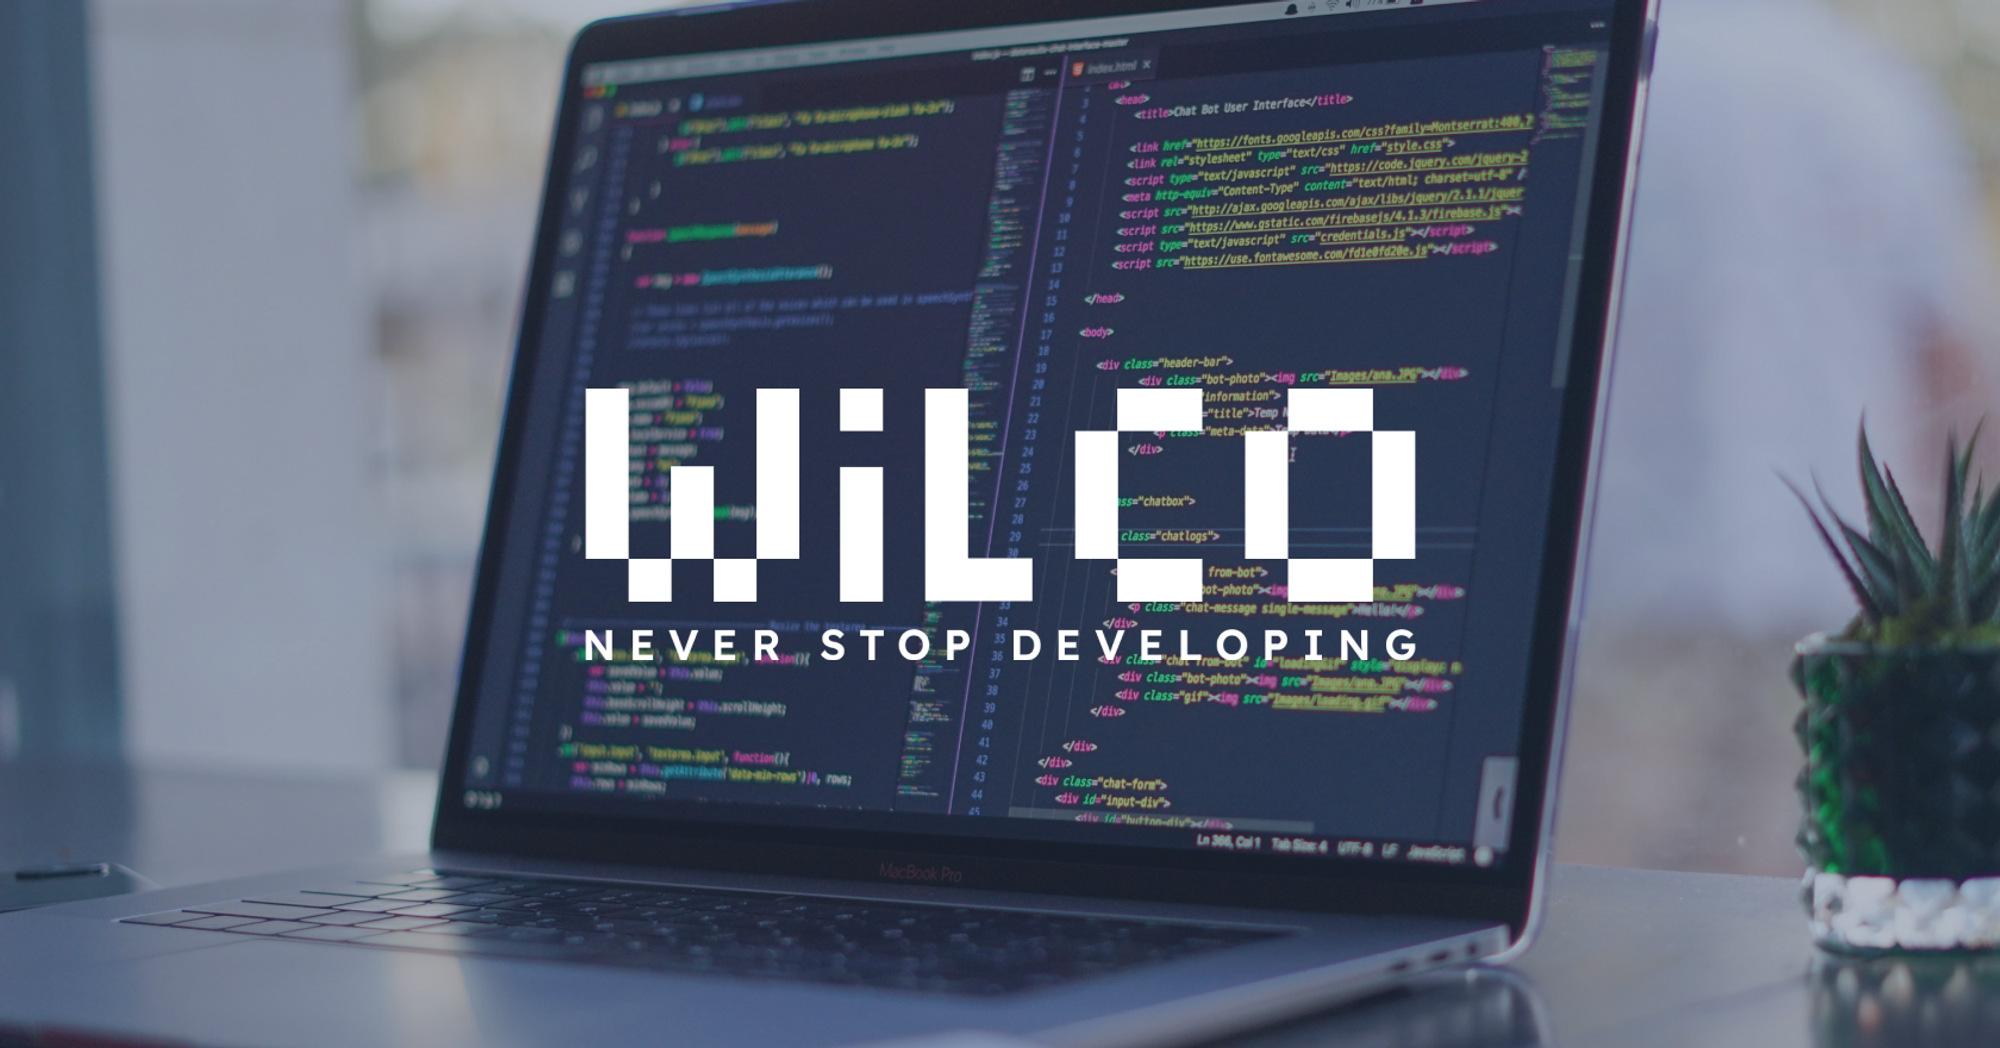 Wilco company logo on top of laptop